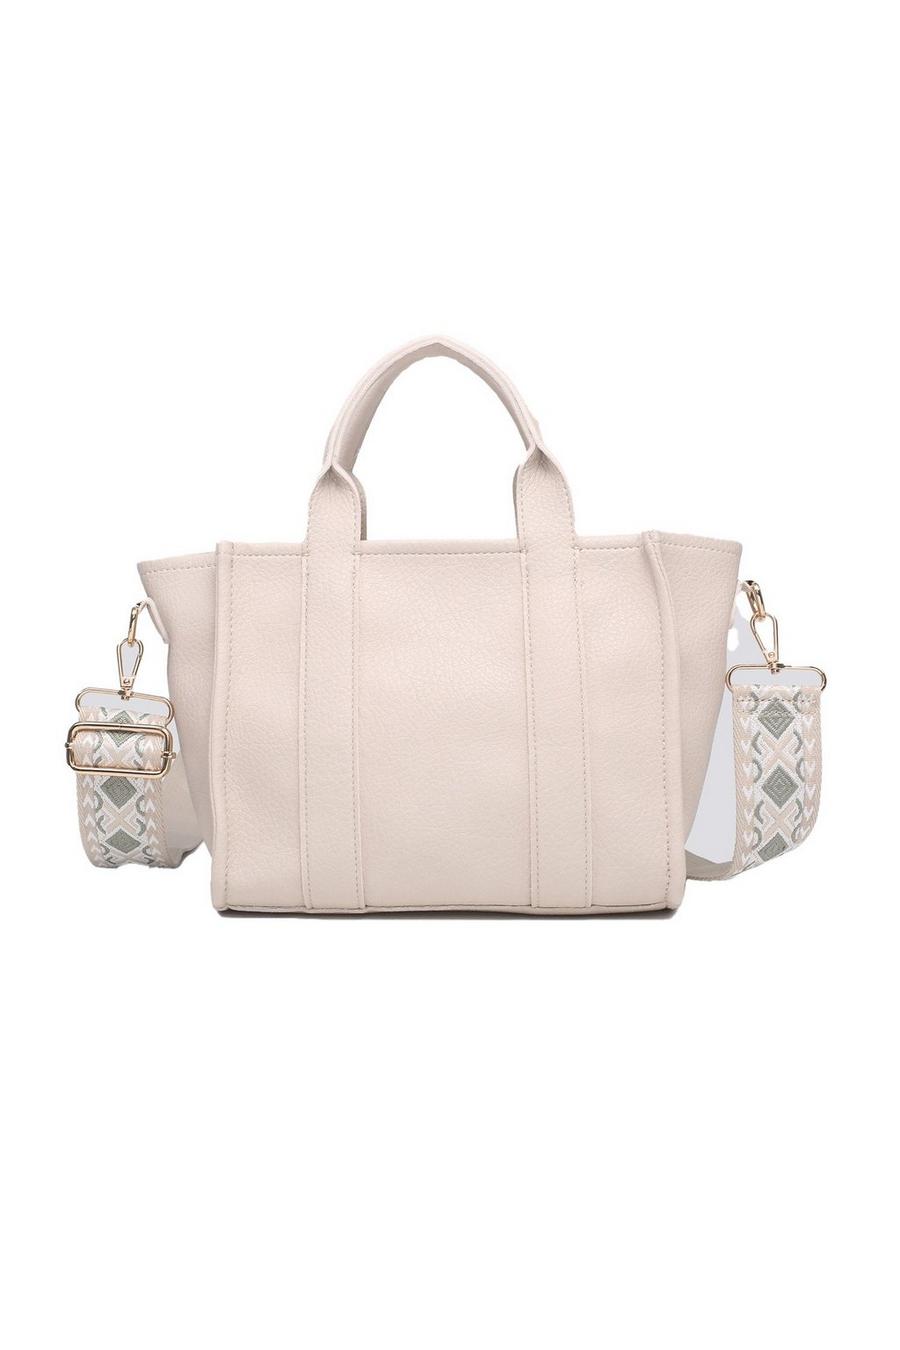 Beige Medium Size Roomy  Double Handle Tote Handbag  Shoulder Bag With Canvas Strap